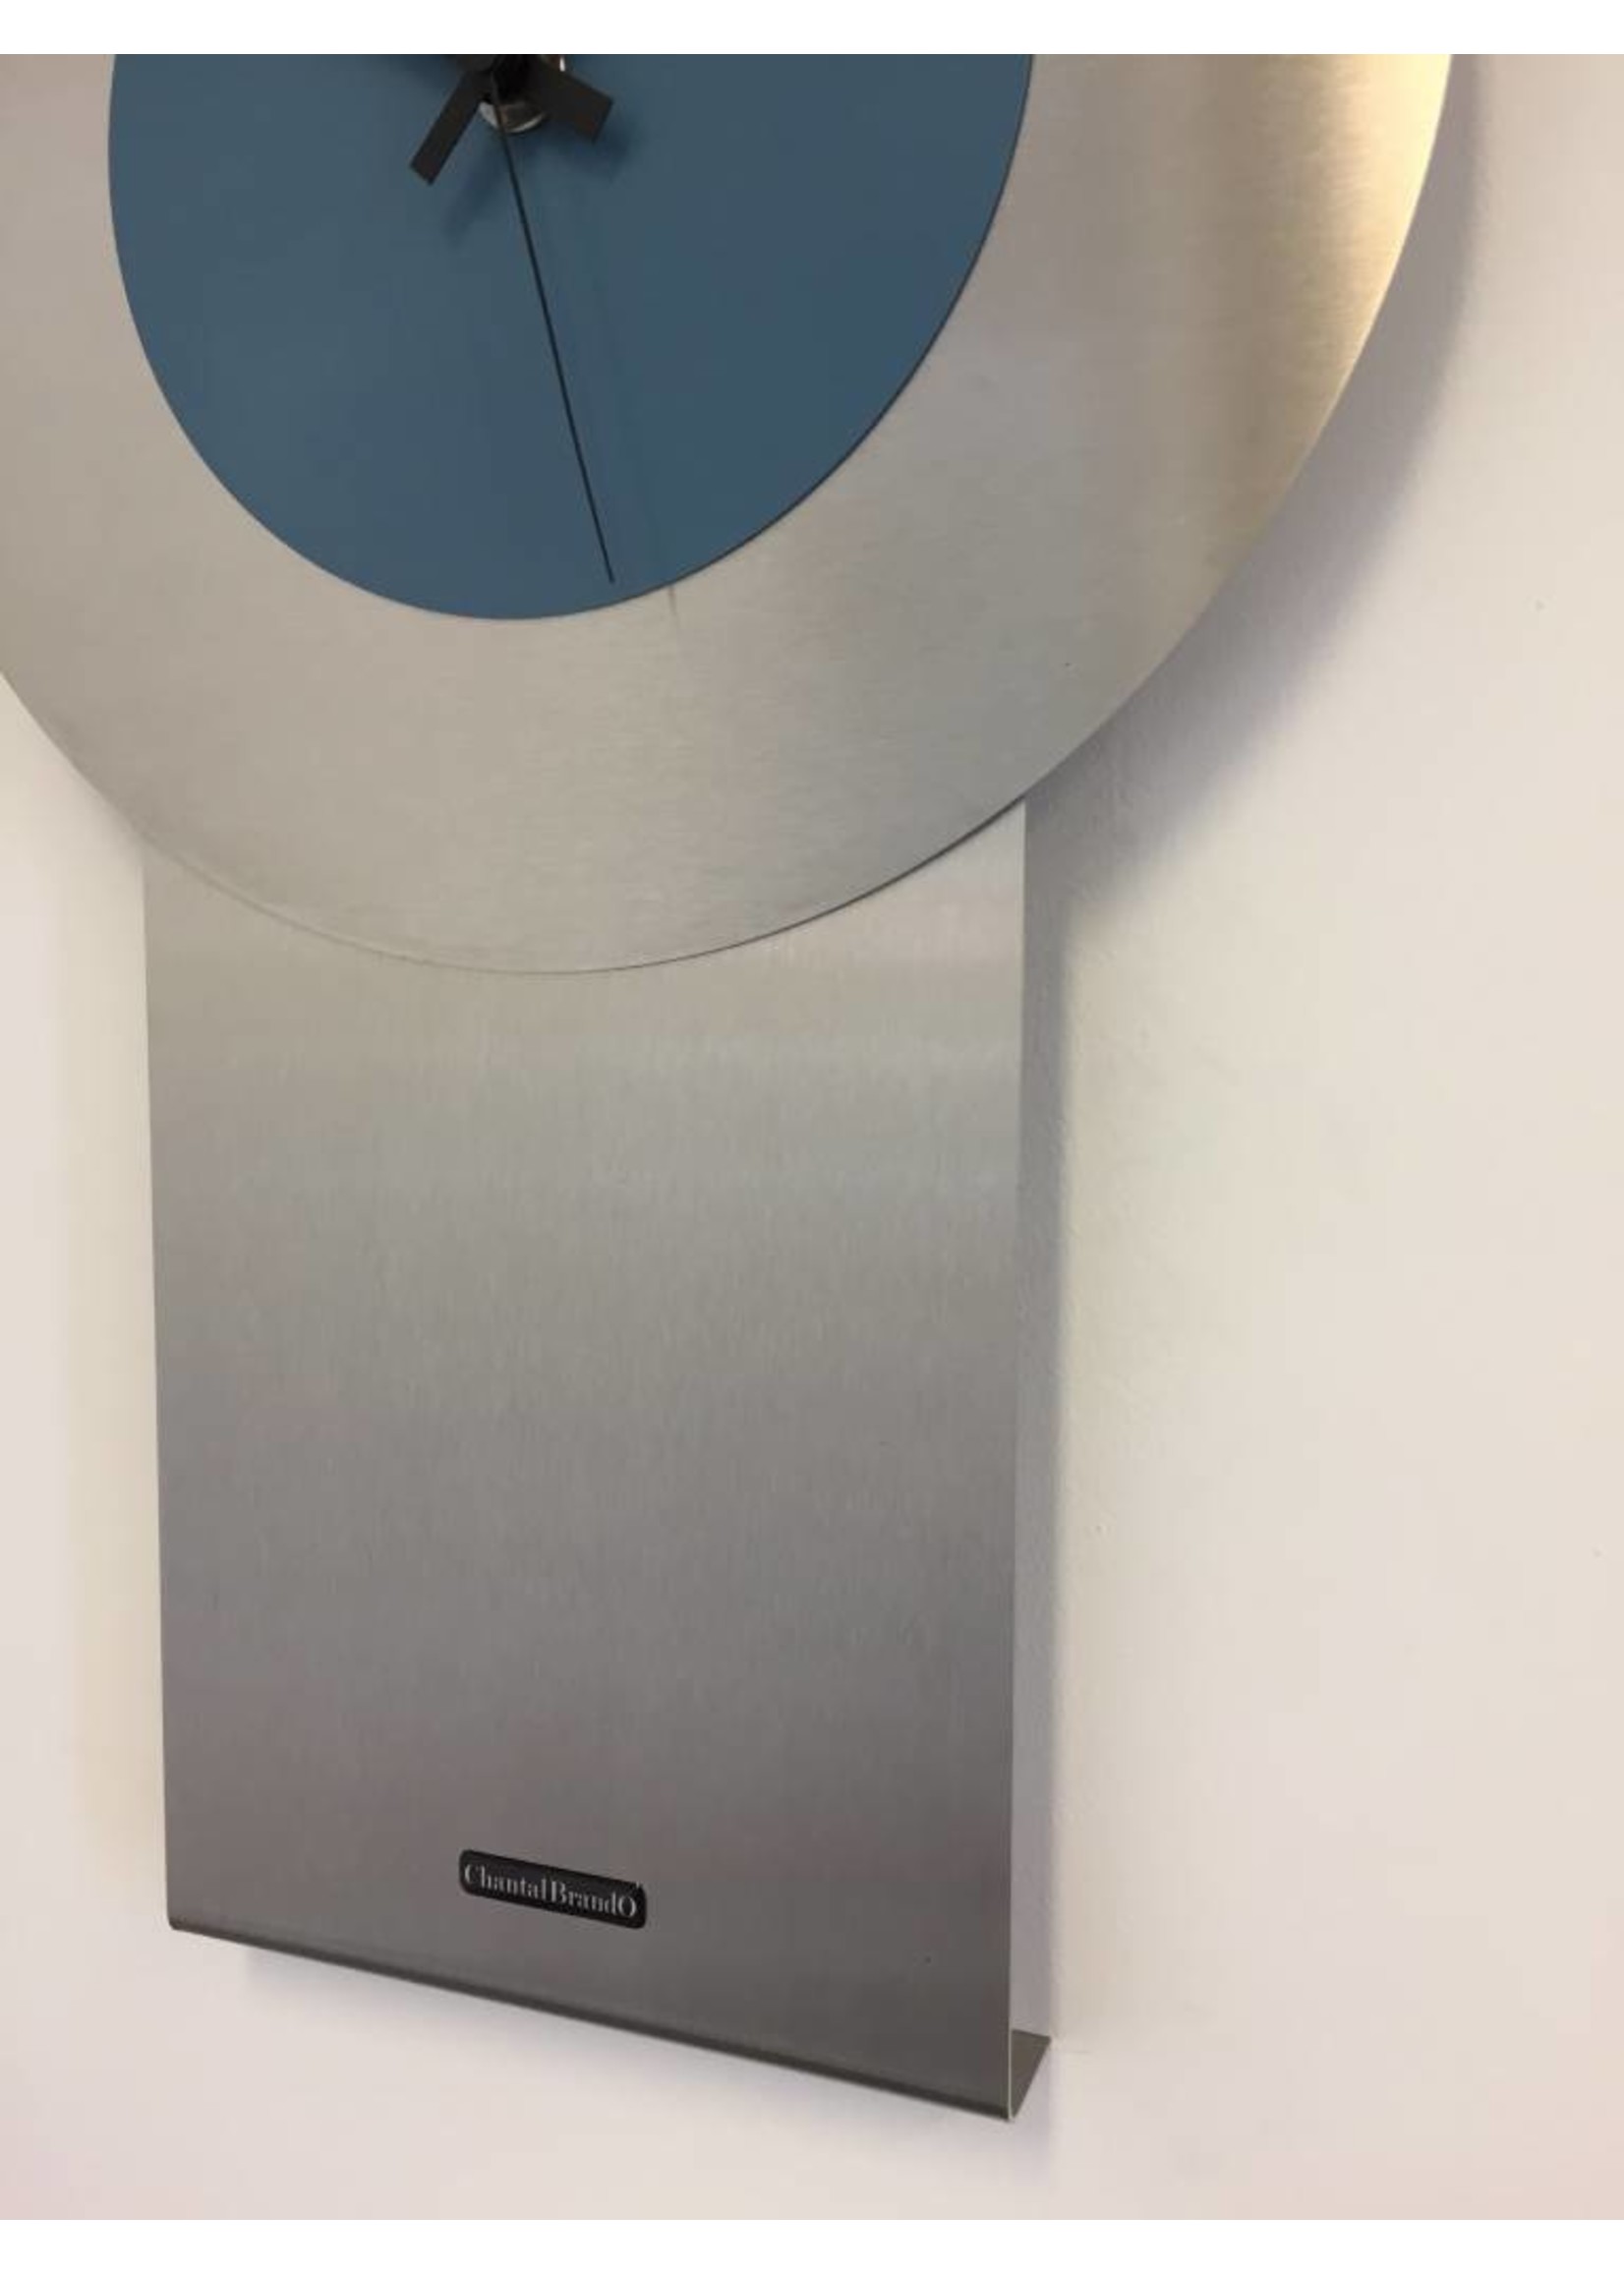 Klokkendiscounter BeoXL - Wanduhr Pendulum Steel-Blue Design